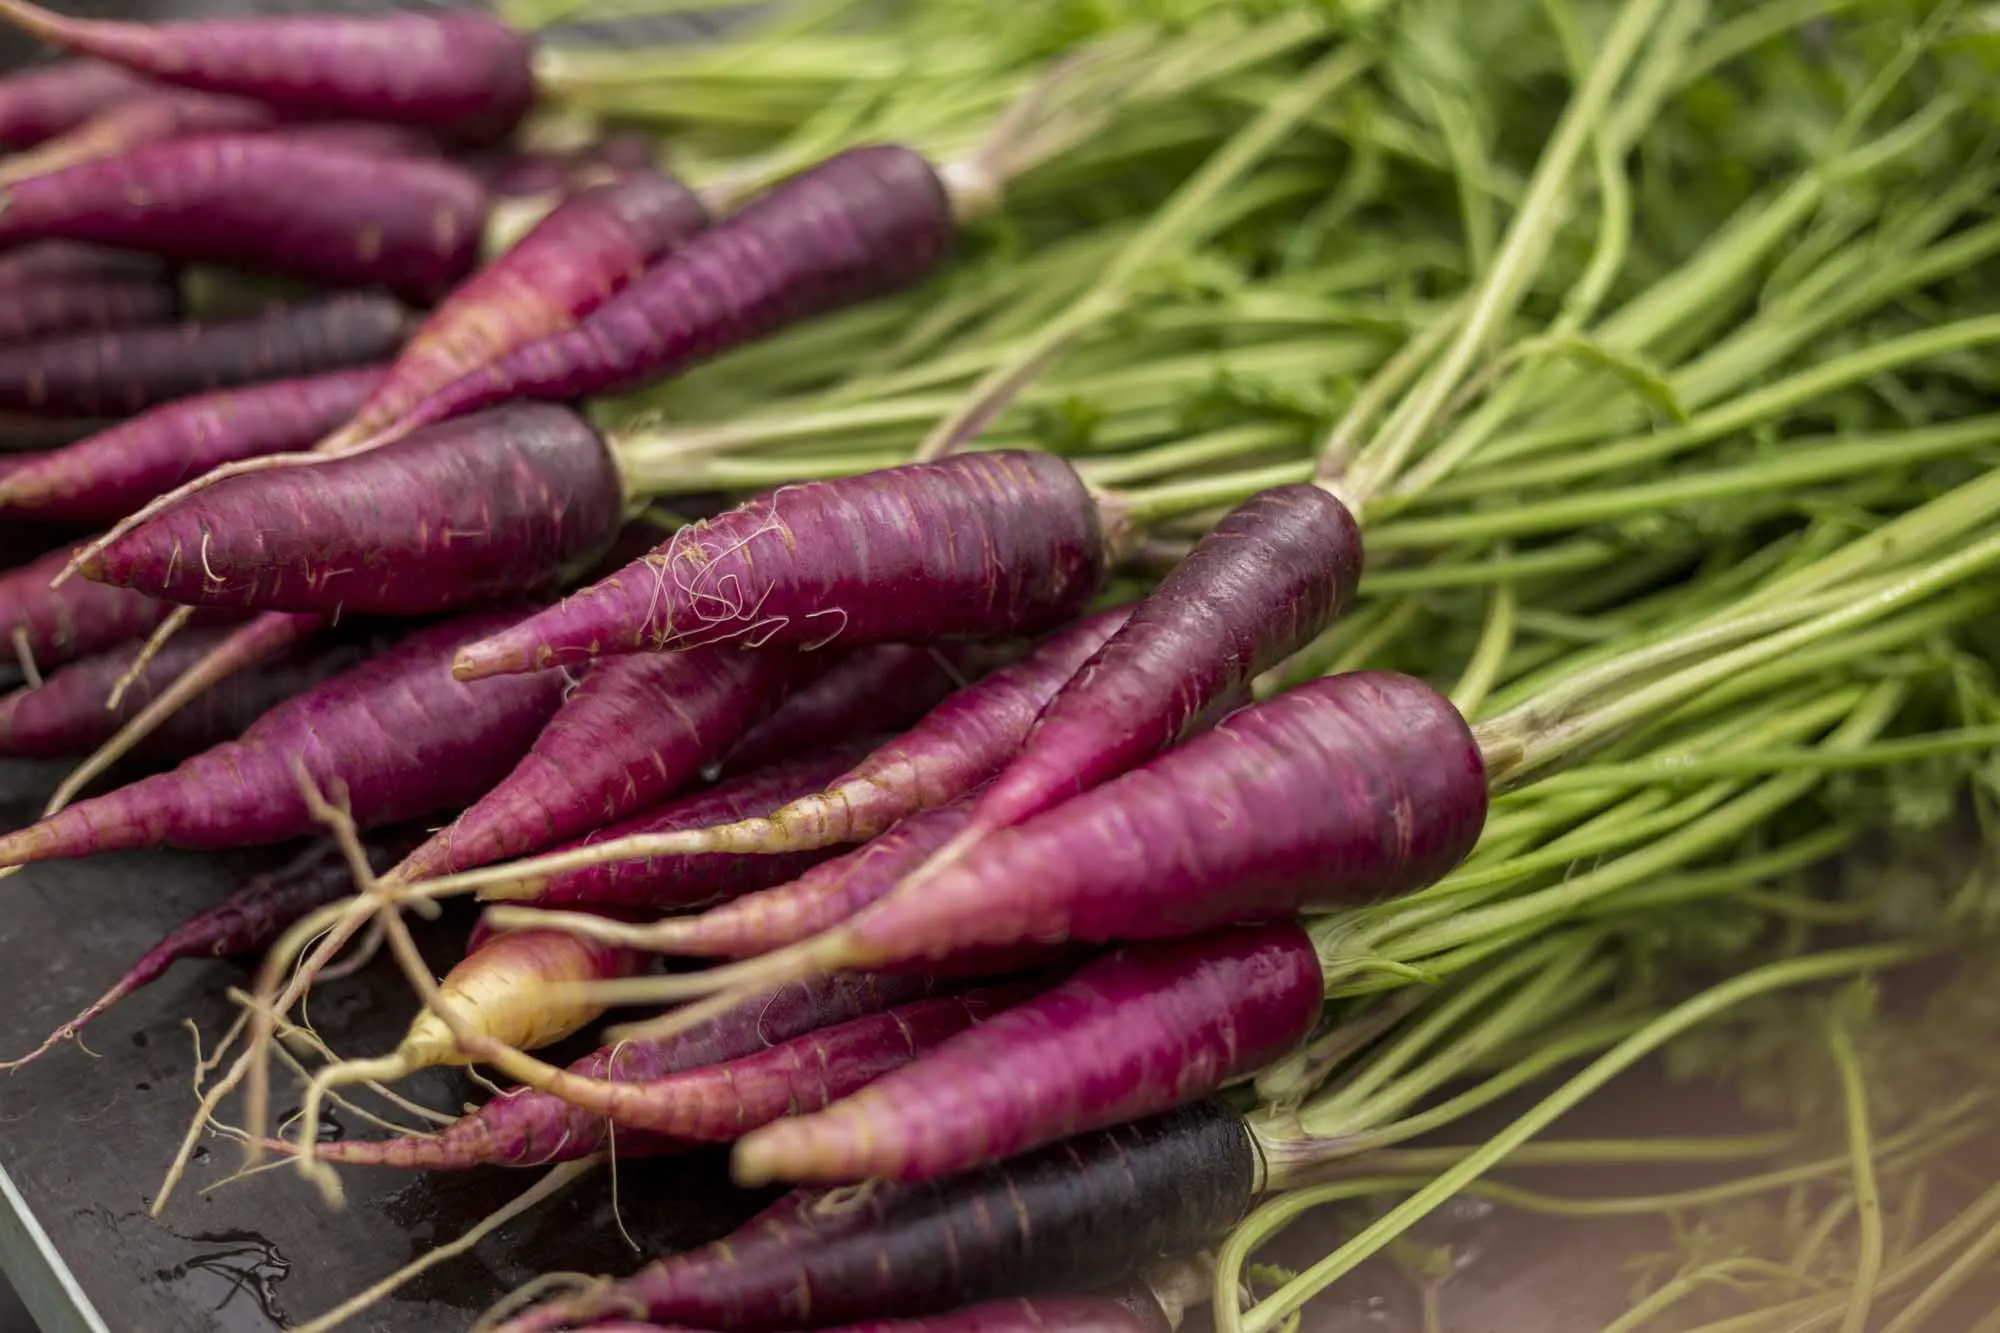 Purple carrots